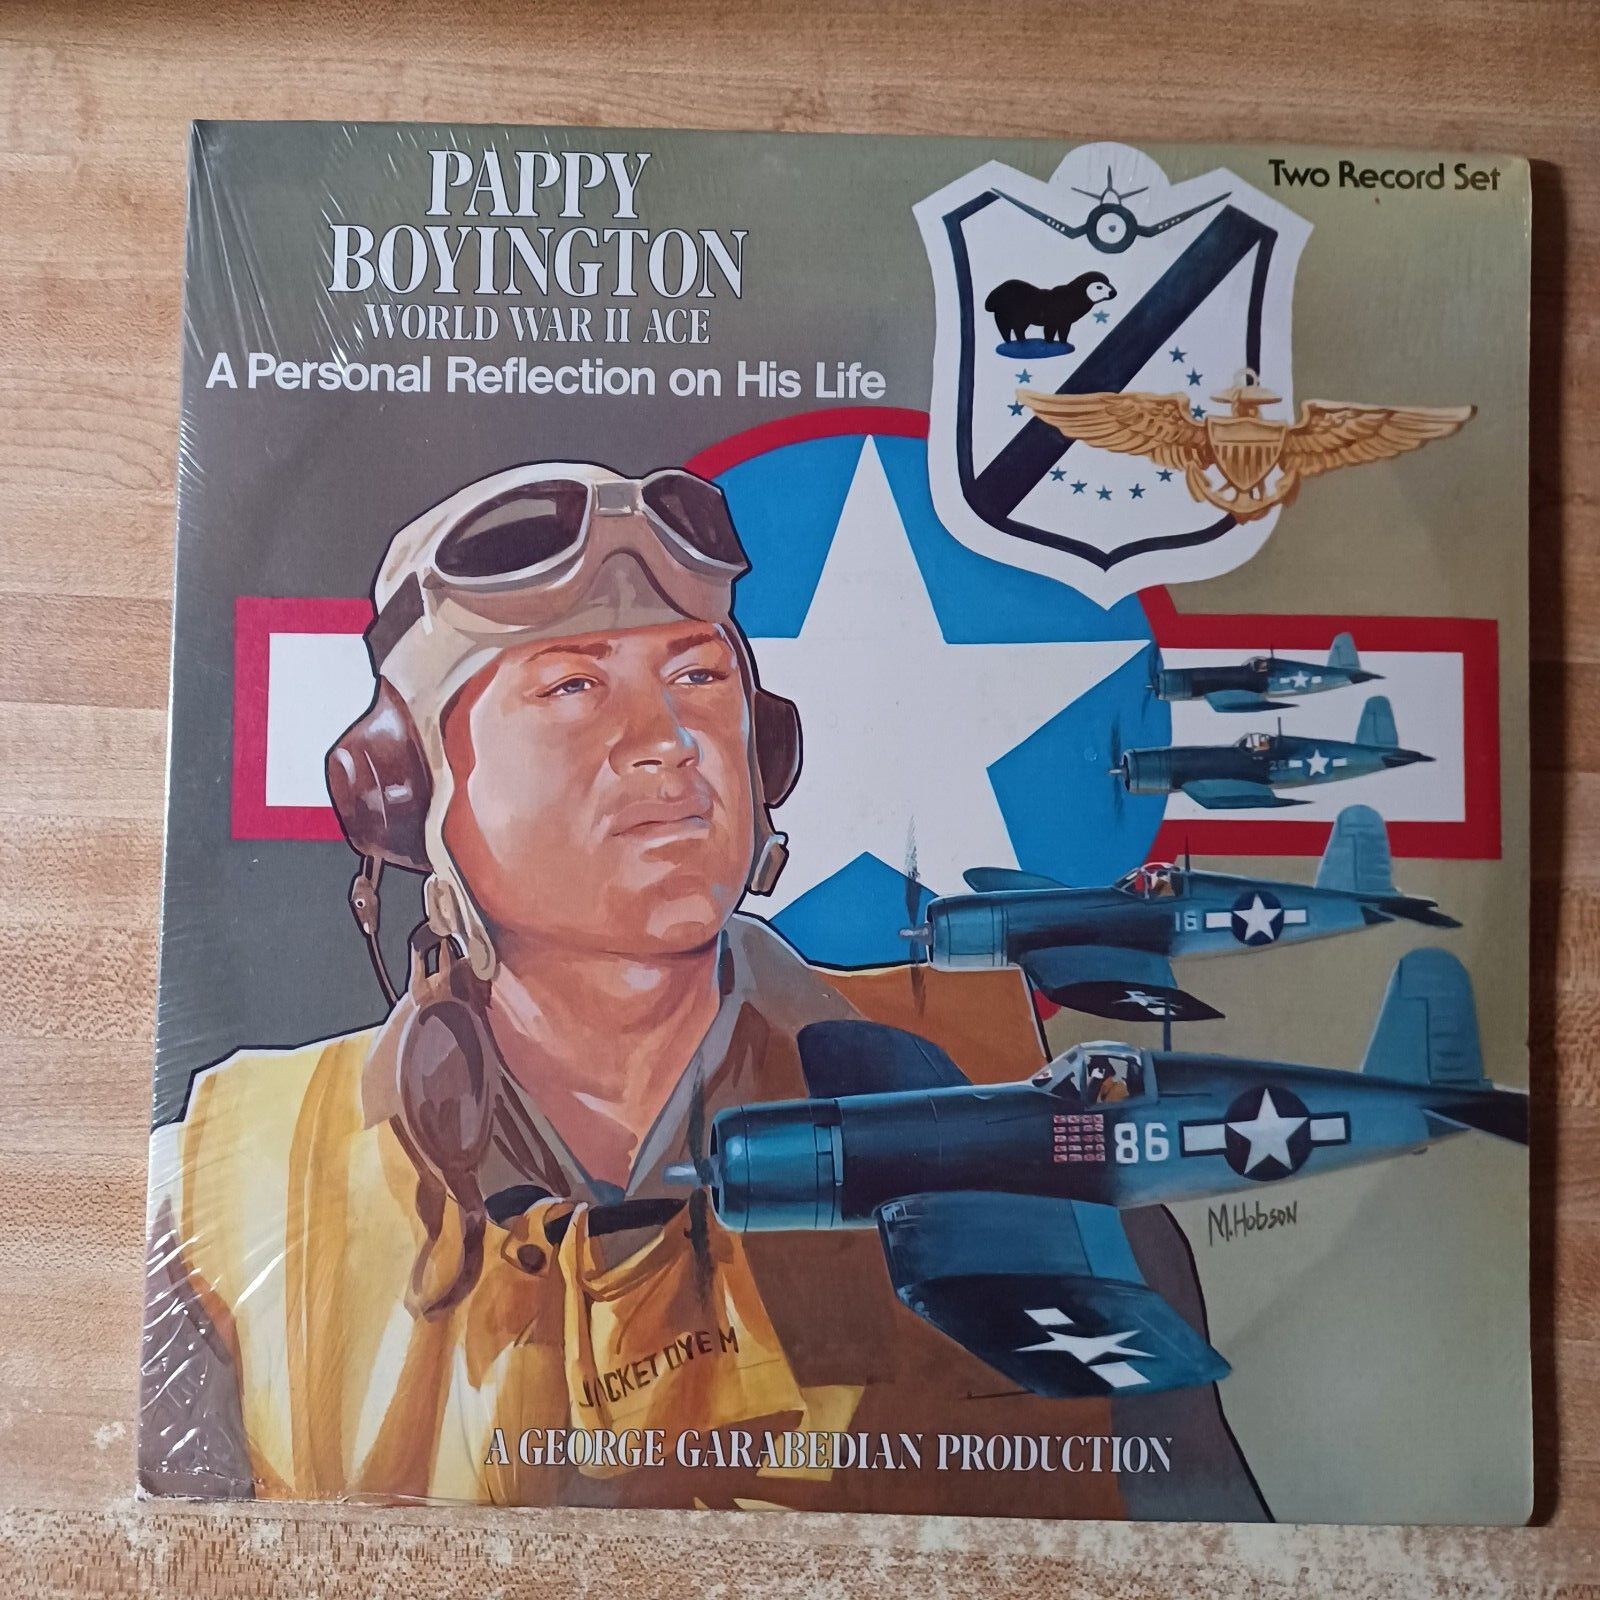 Pappy Boyington World Ware II Ace - Original Vinyl Album LP SEALED